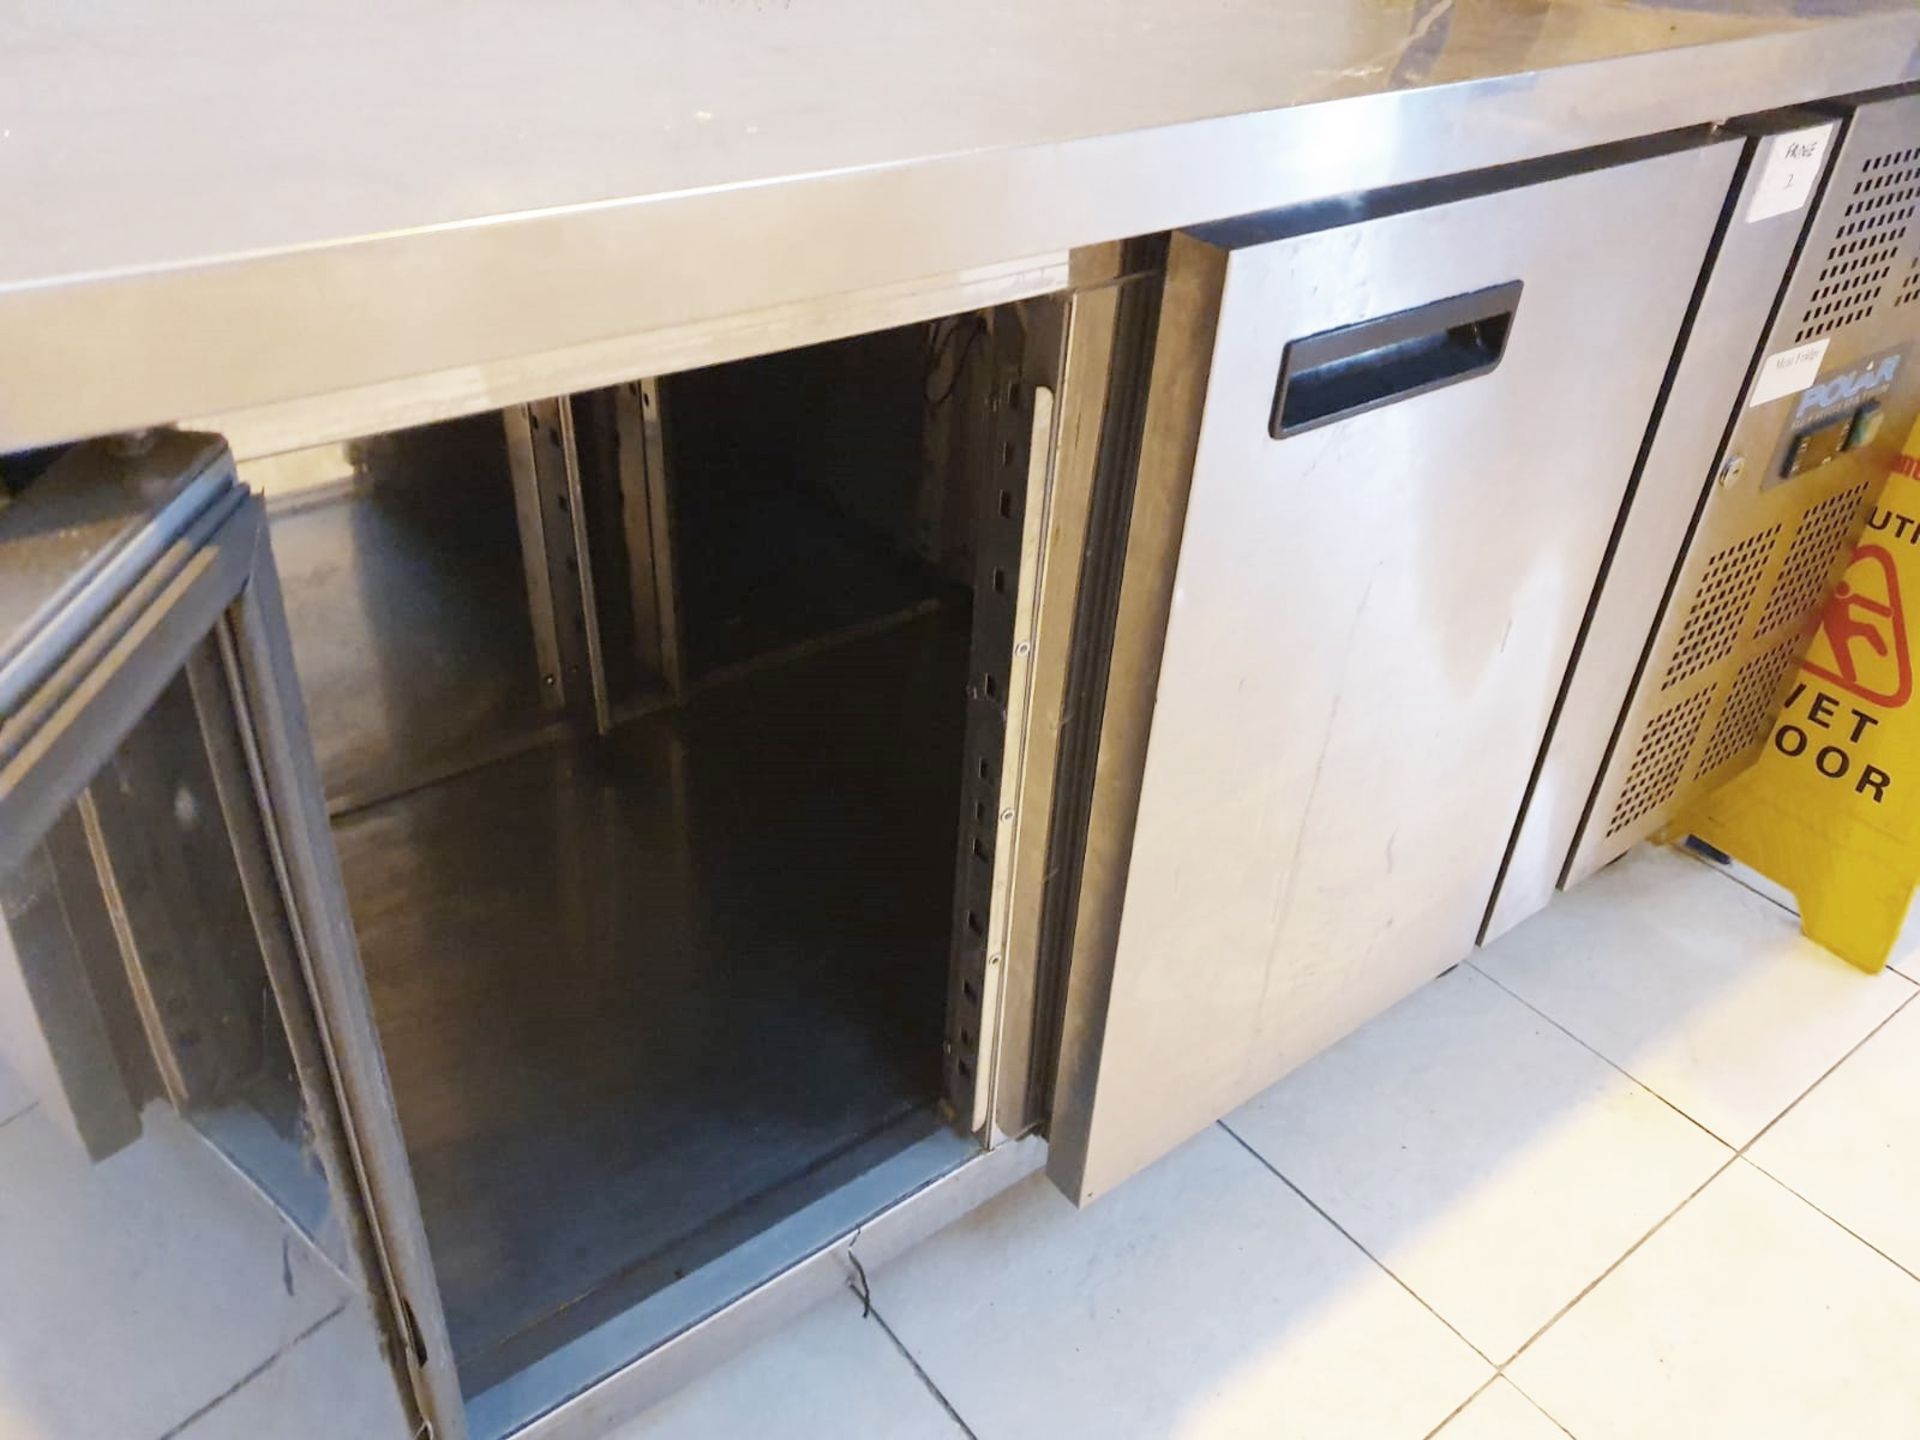 1 x Polar Stainless Steel 4-Door Counter Freezer 553 Ltr. Model: G601 **£5 Start - No Reserve** - Image 4 of 7